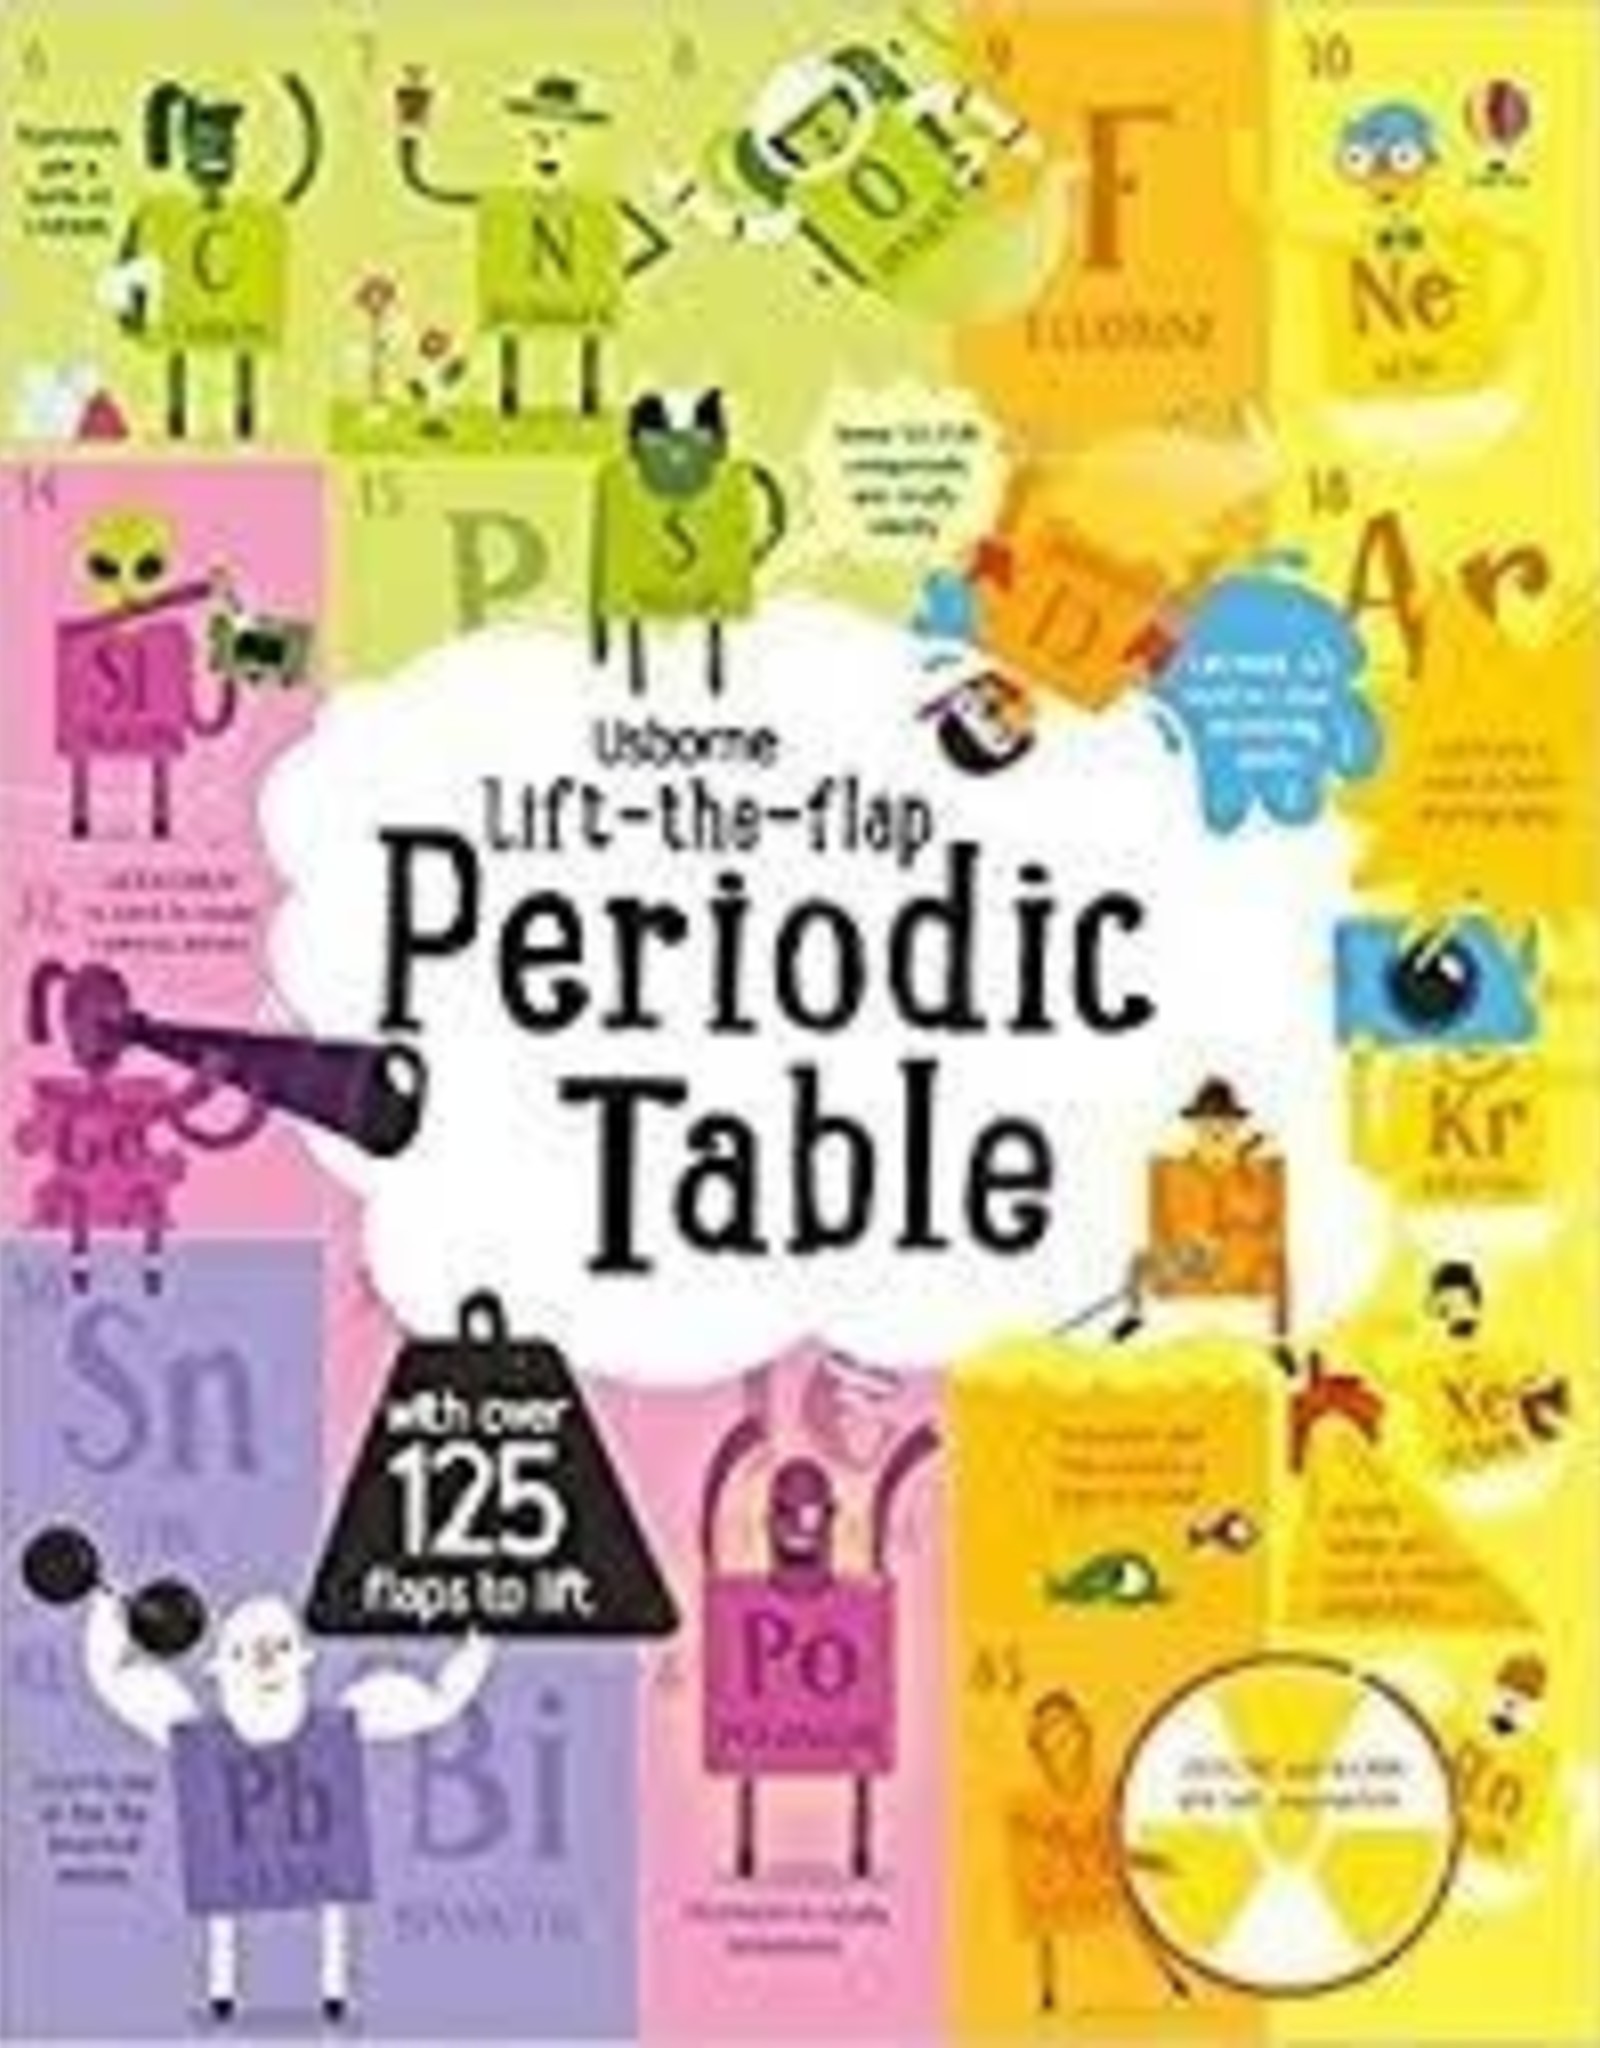 Usborne Lift the Flap Periodic Table